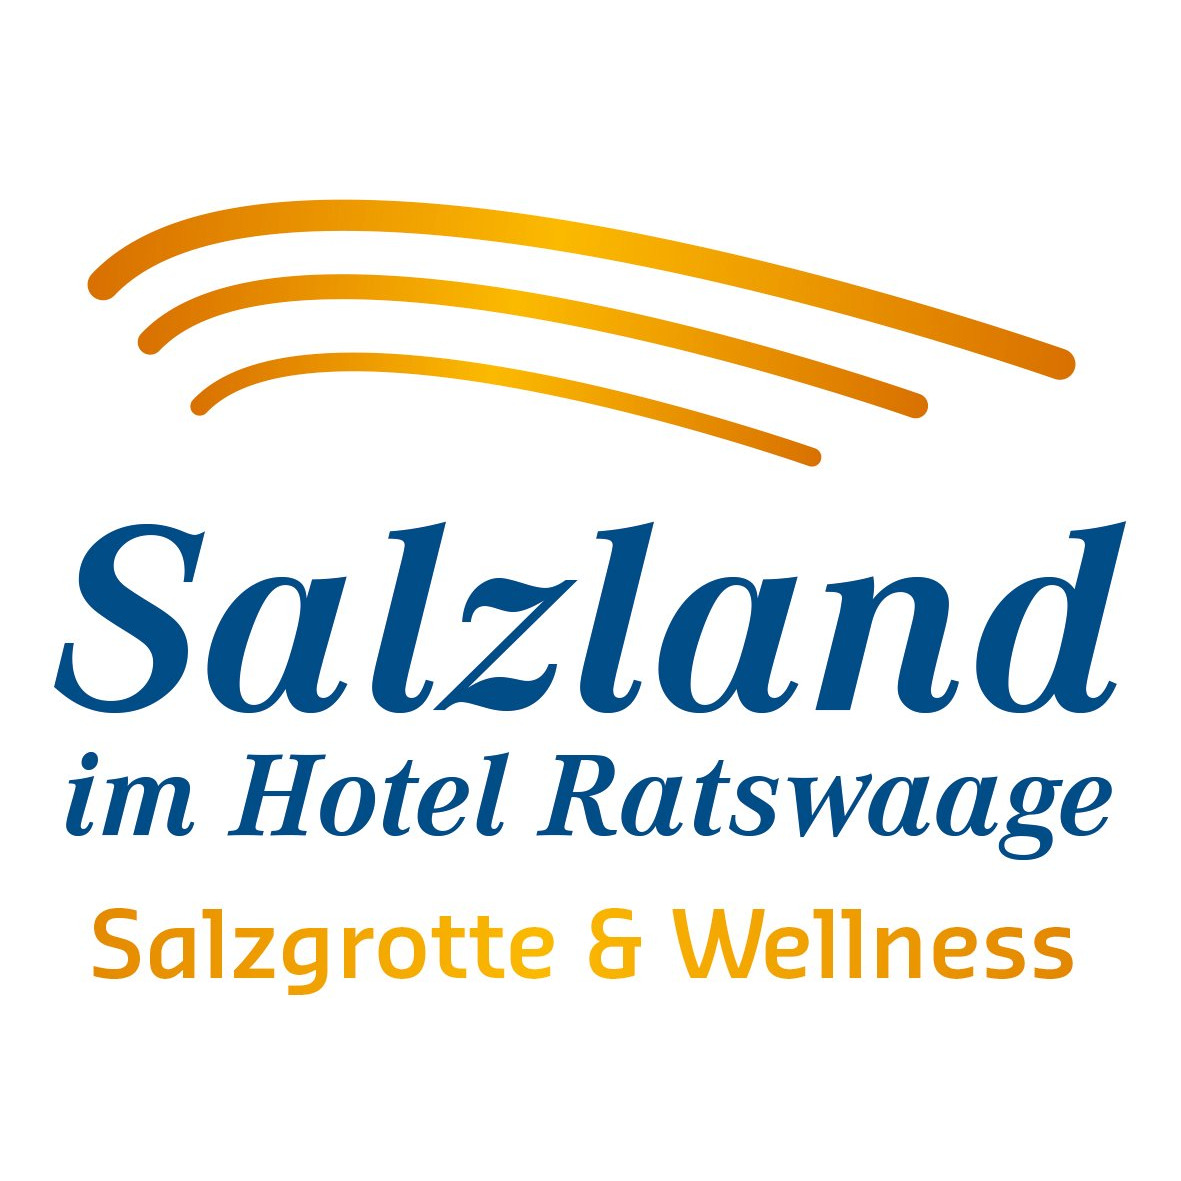 Salzland im Hotel Ratswaage  